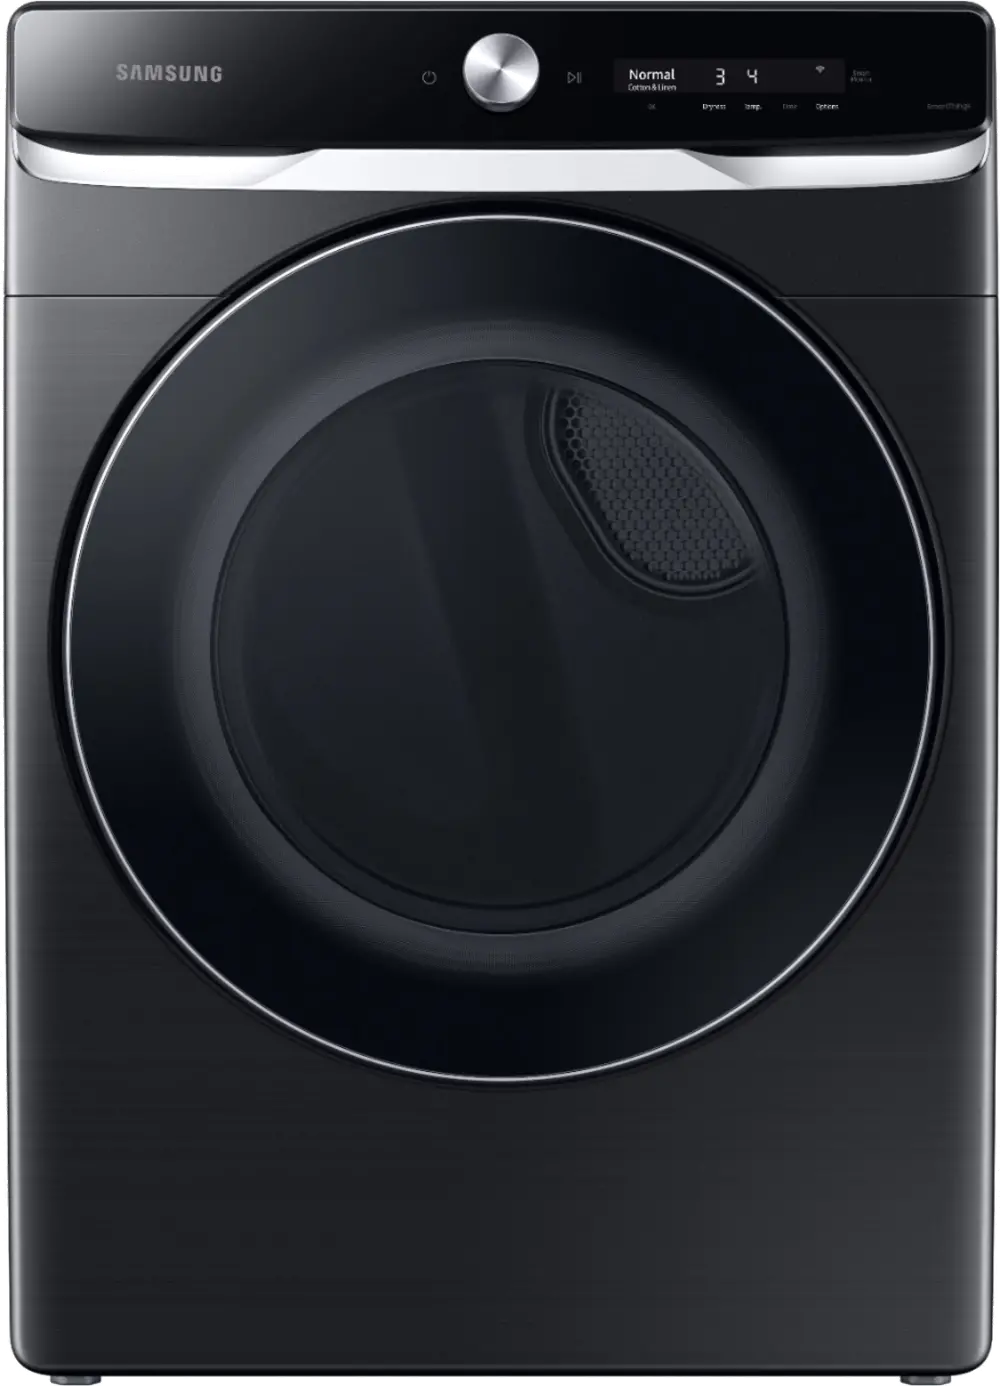 DVG50A8800V Samsung Smart Dial Gas Dryer with Super Speed Dry - 7.5 cu. ft. Brushed Black-1